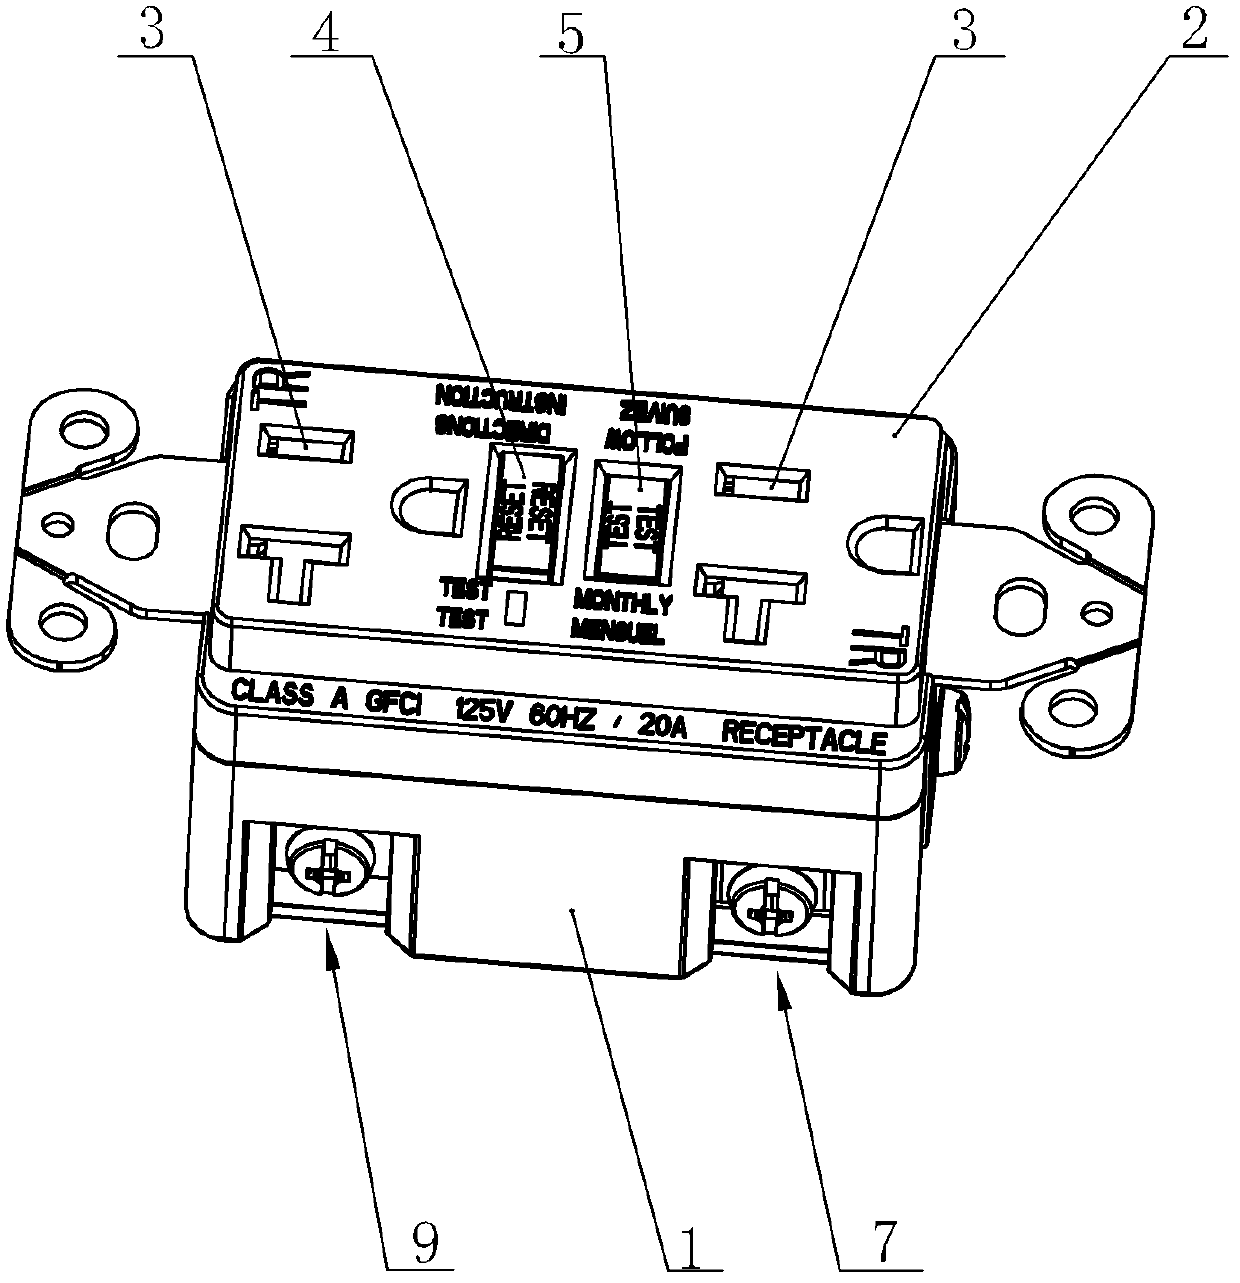 Socket type ground fault circuit interrupter